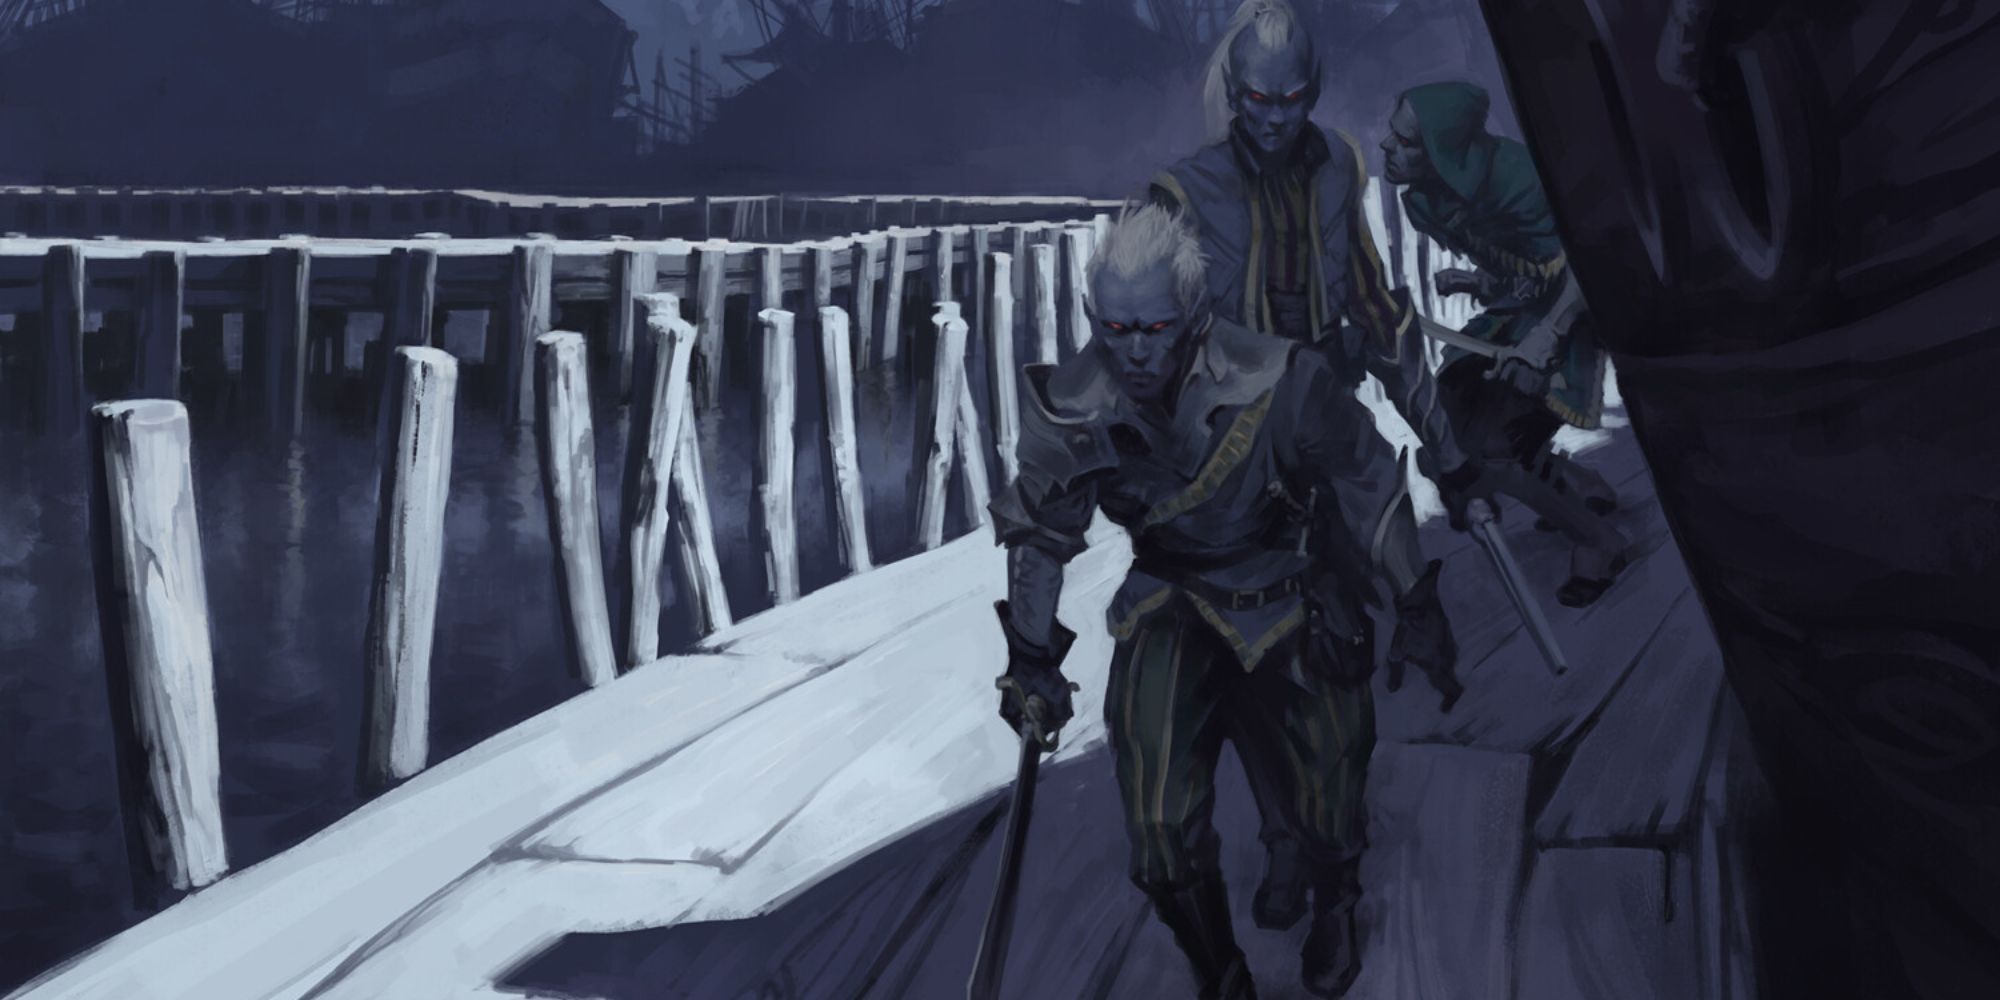 D&D artwork of Bregan D’aerthe and their team sneaking past a ship